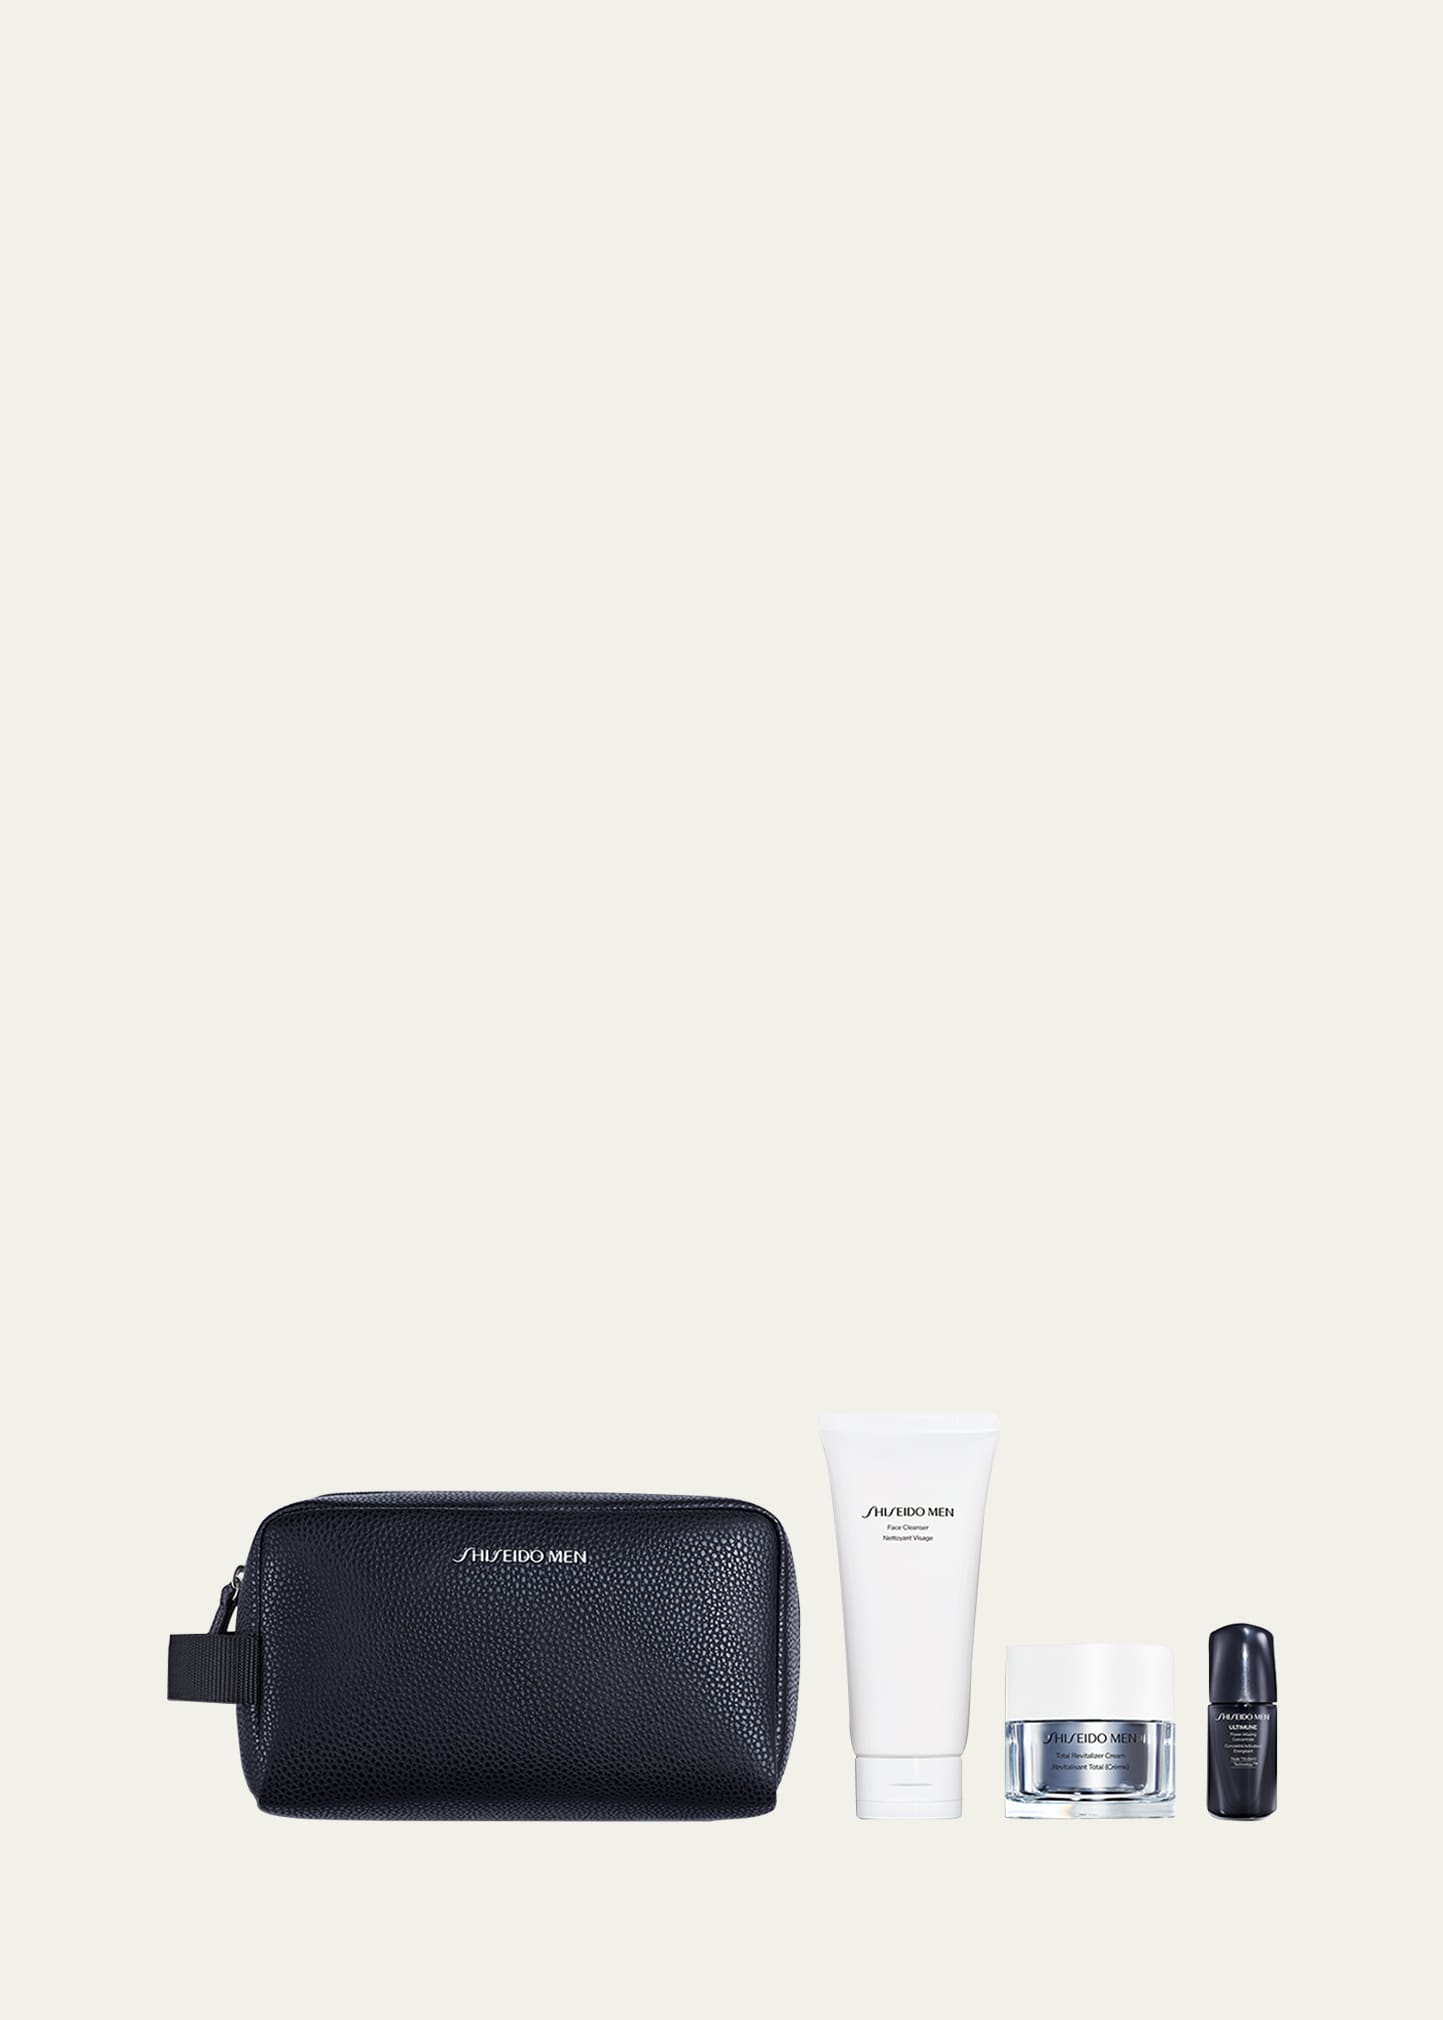 Limited Edition Shiseido Men Skin Revitalization Set ($123 Value)